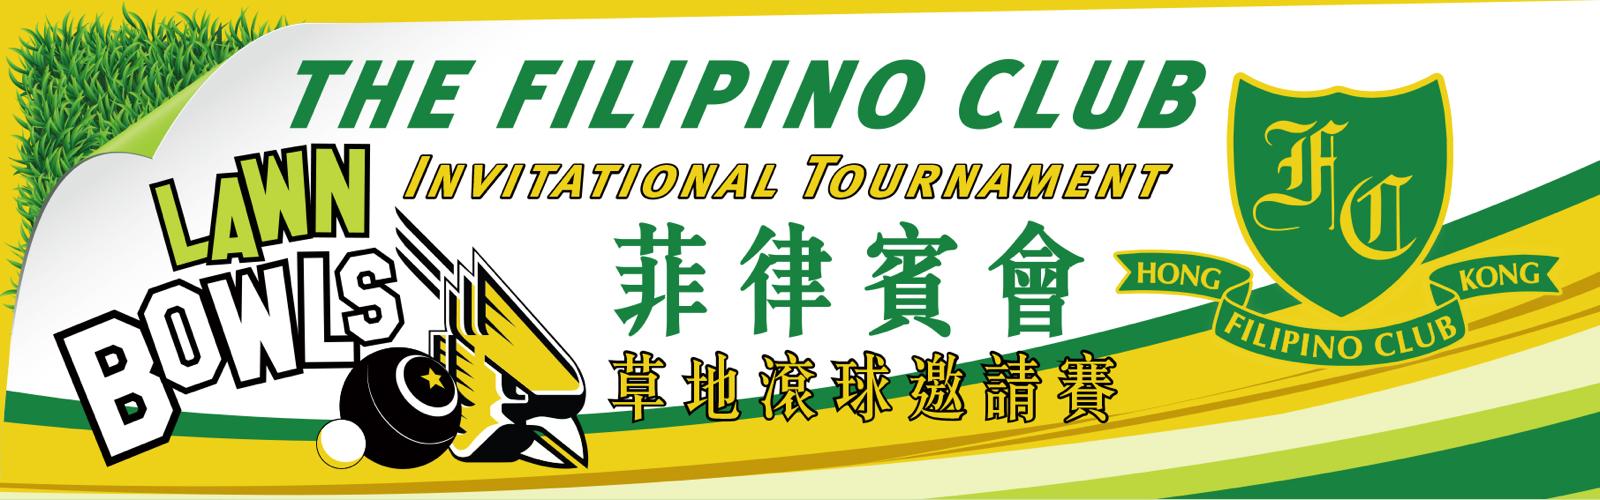 The Filipino Club Invitational Tournament 2018 (Updated on 19/11/18)